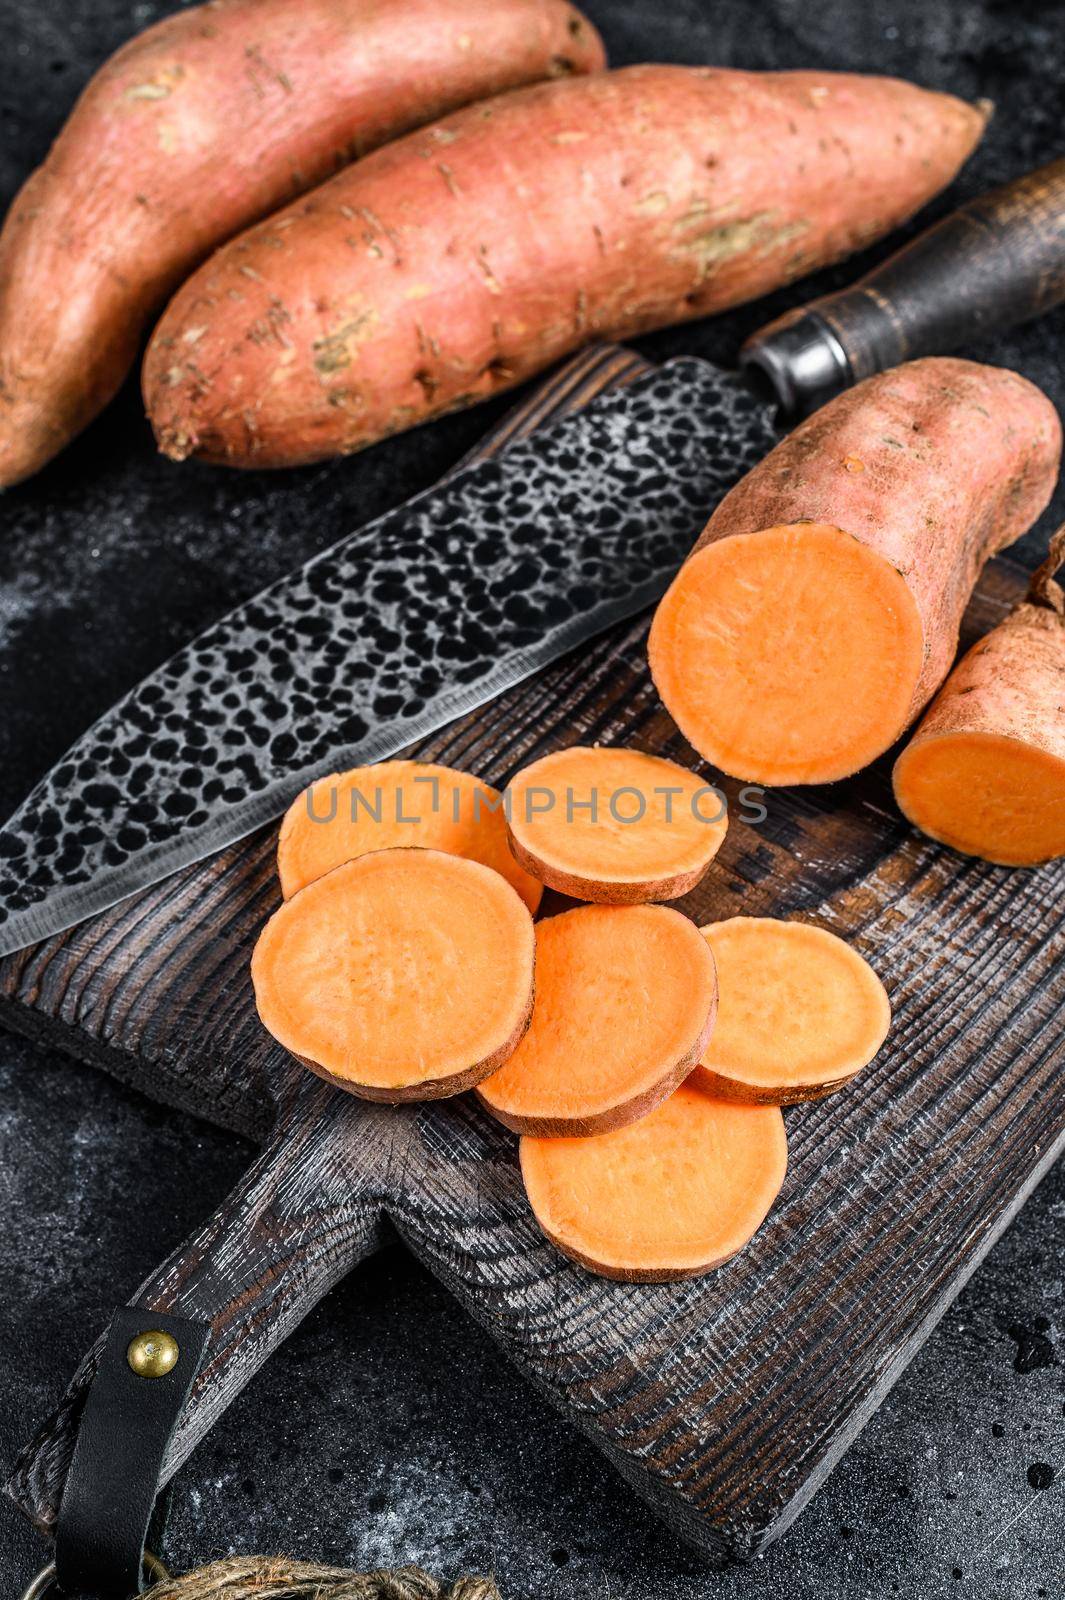 Raw cut batata Sweet potato on Wooden cutting board. Black background. Top view.